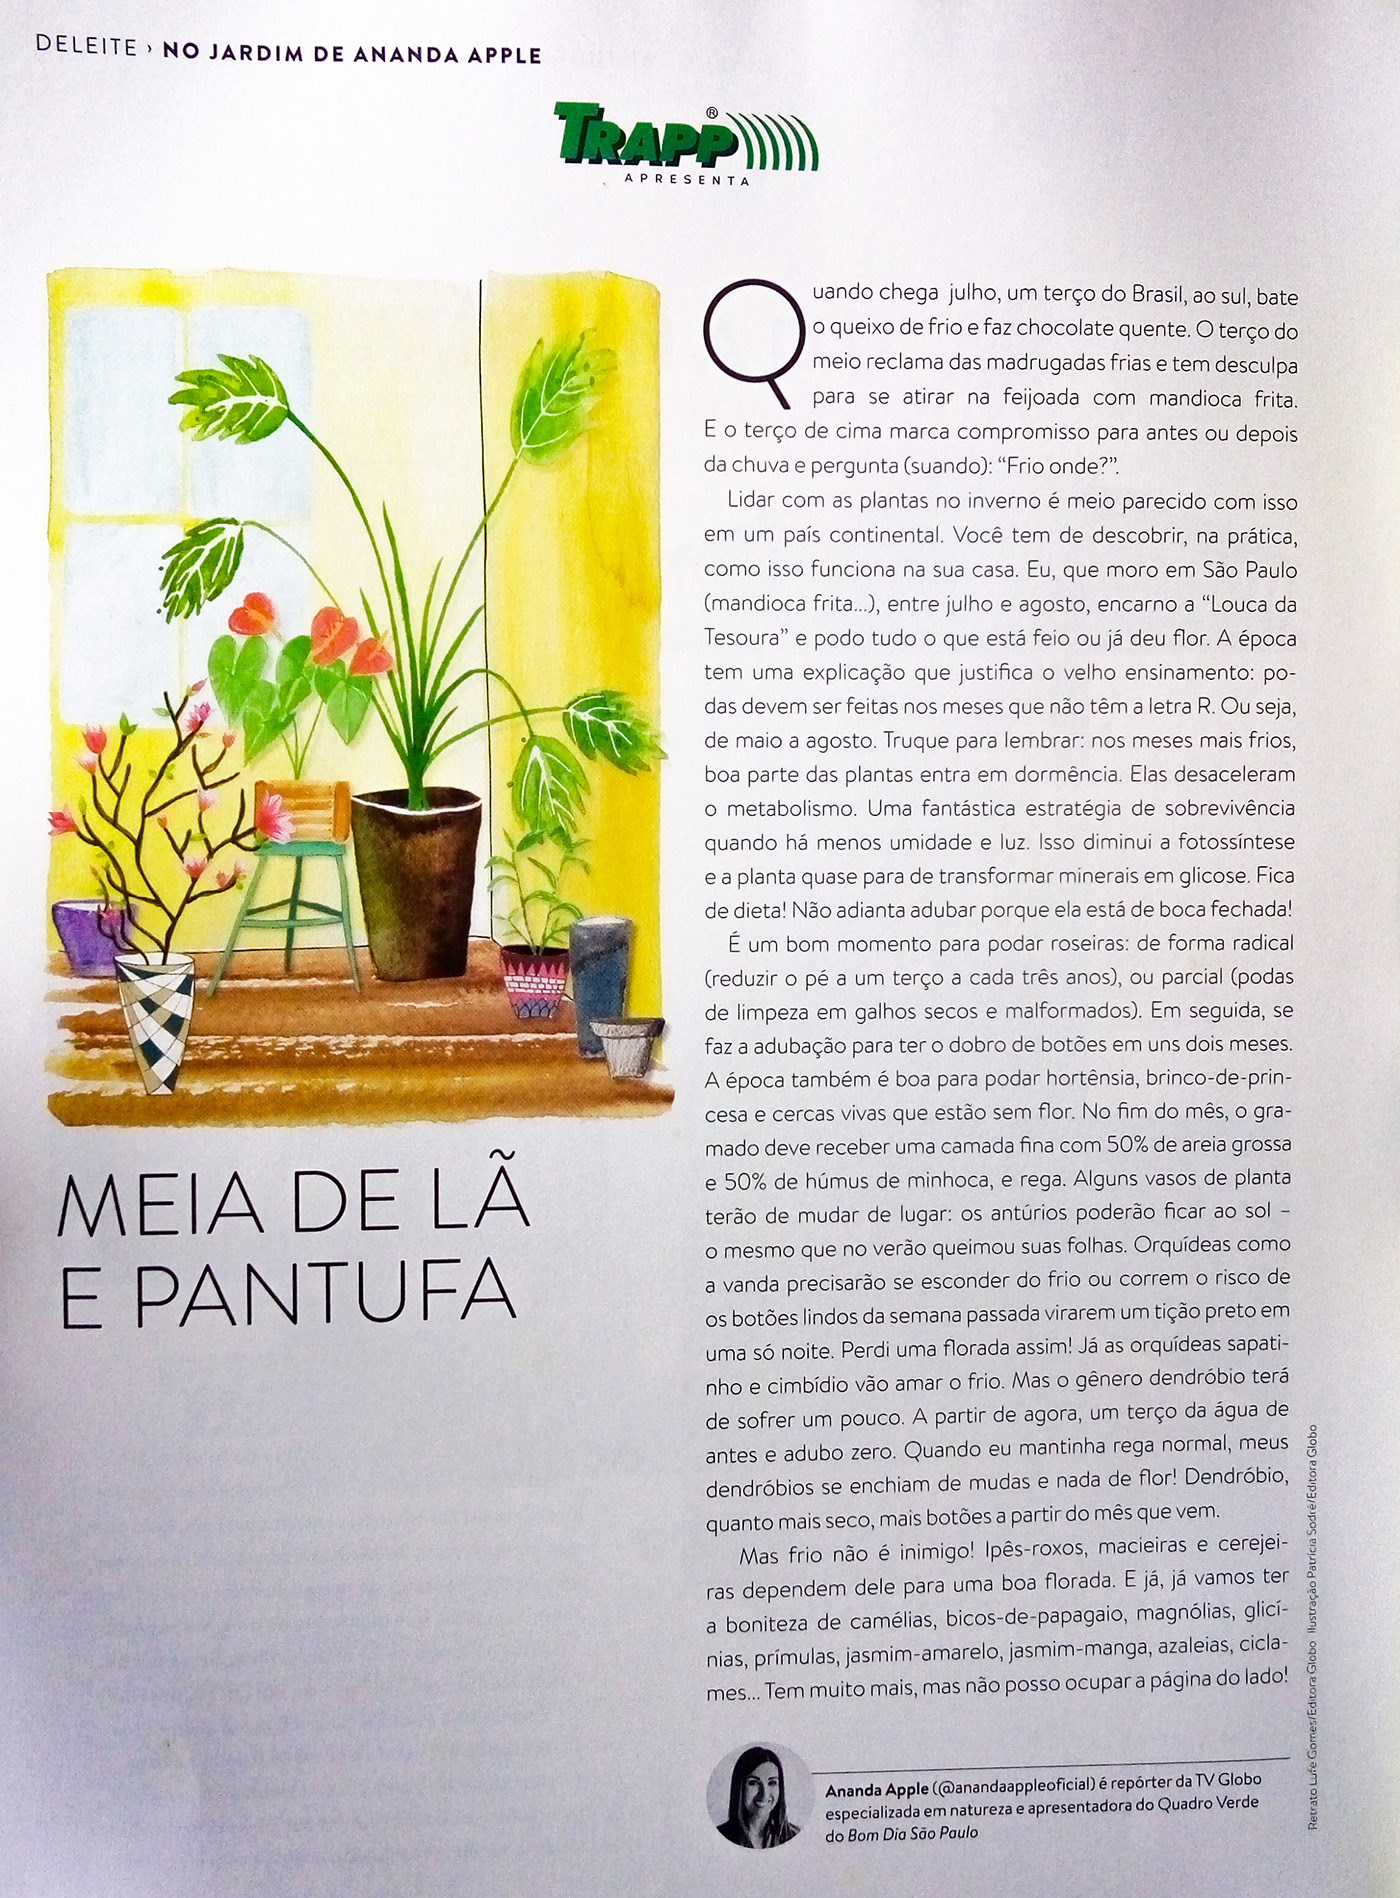 Editorial Illustration - Casa e Jardim on Behance